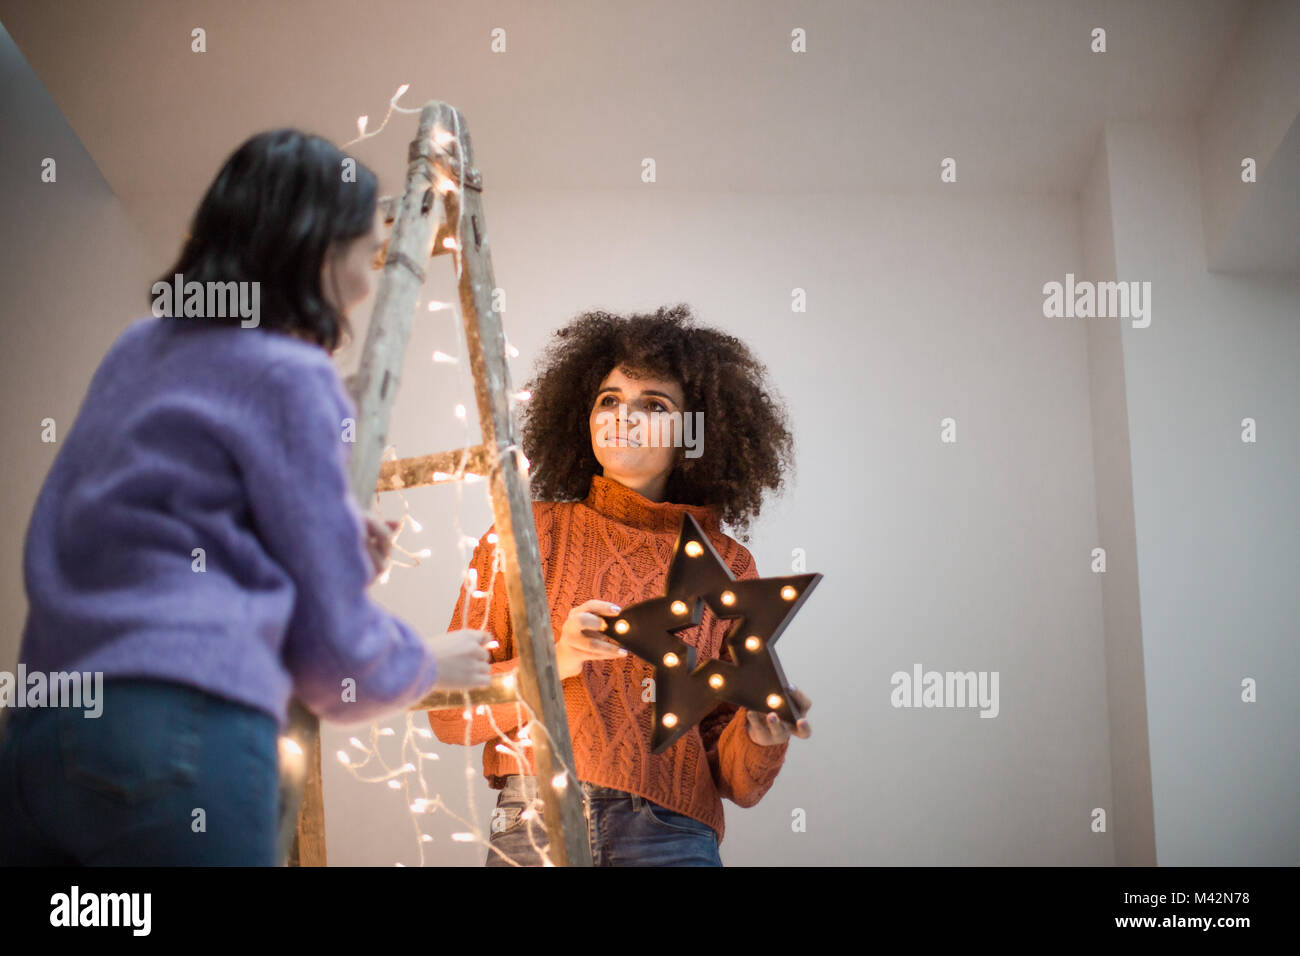 Les amis de décorer un arbre de Noël alternative Banque D'Images